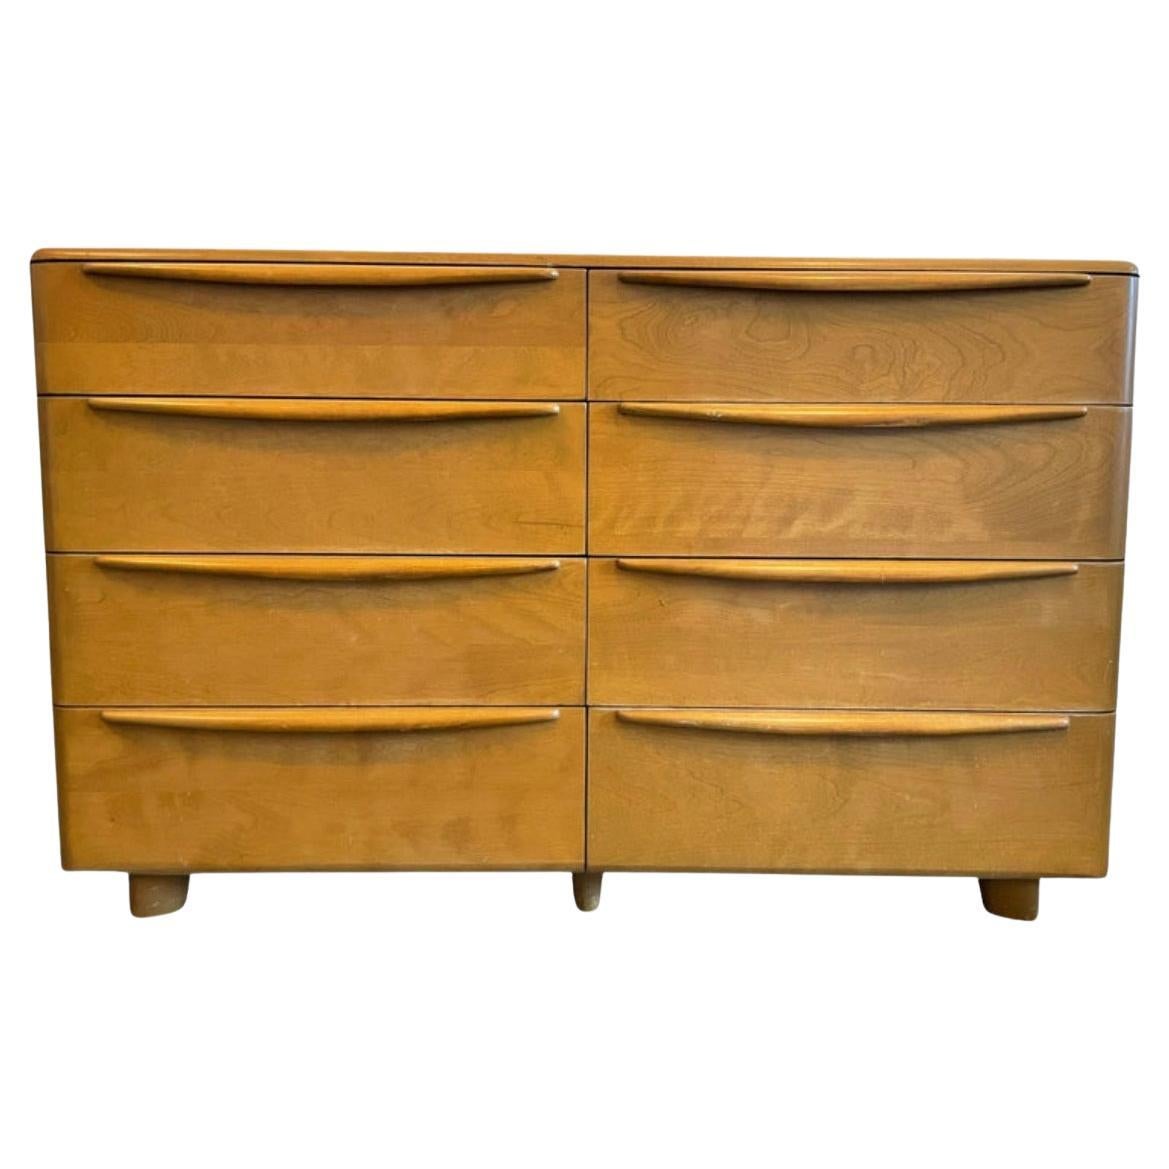 Mid-Century Modern Blonde Solid Maple 8 Drawer Dresser by Heywood Wakefield